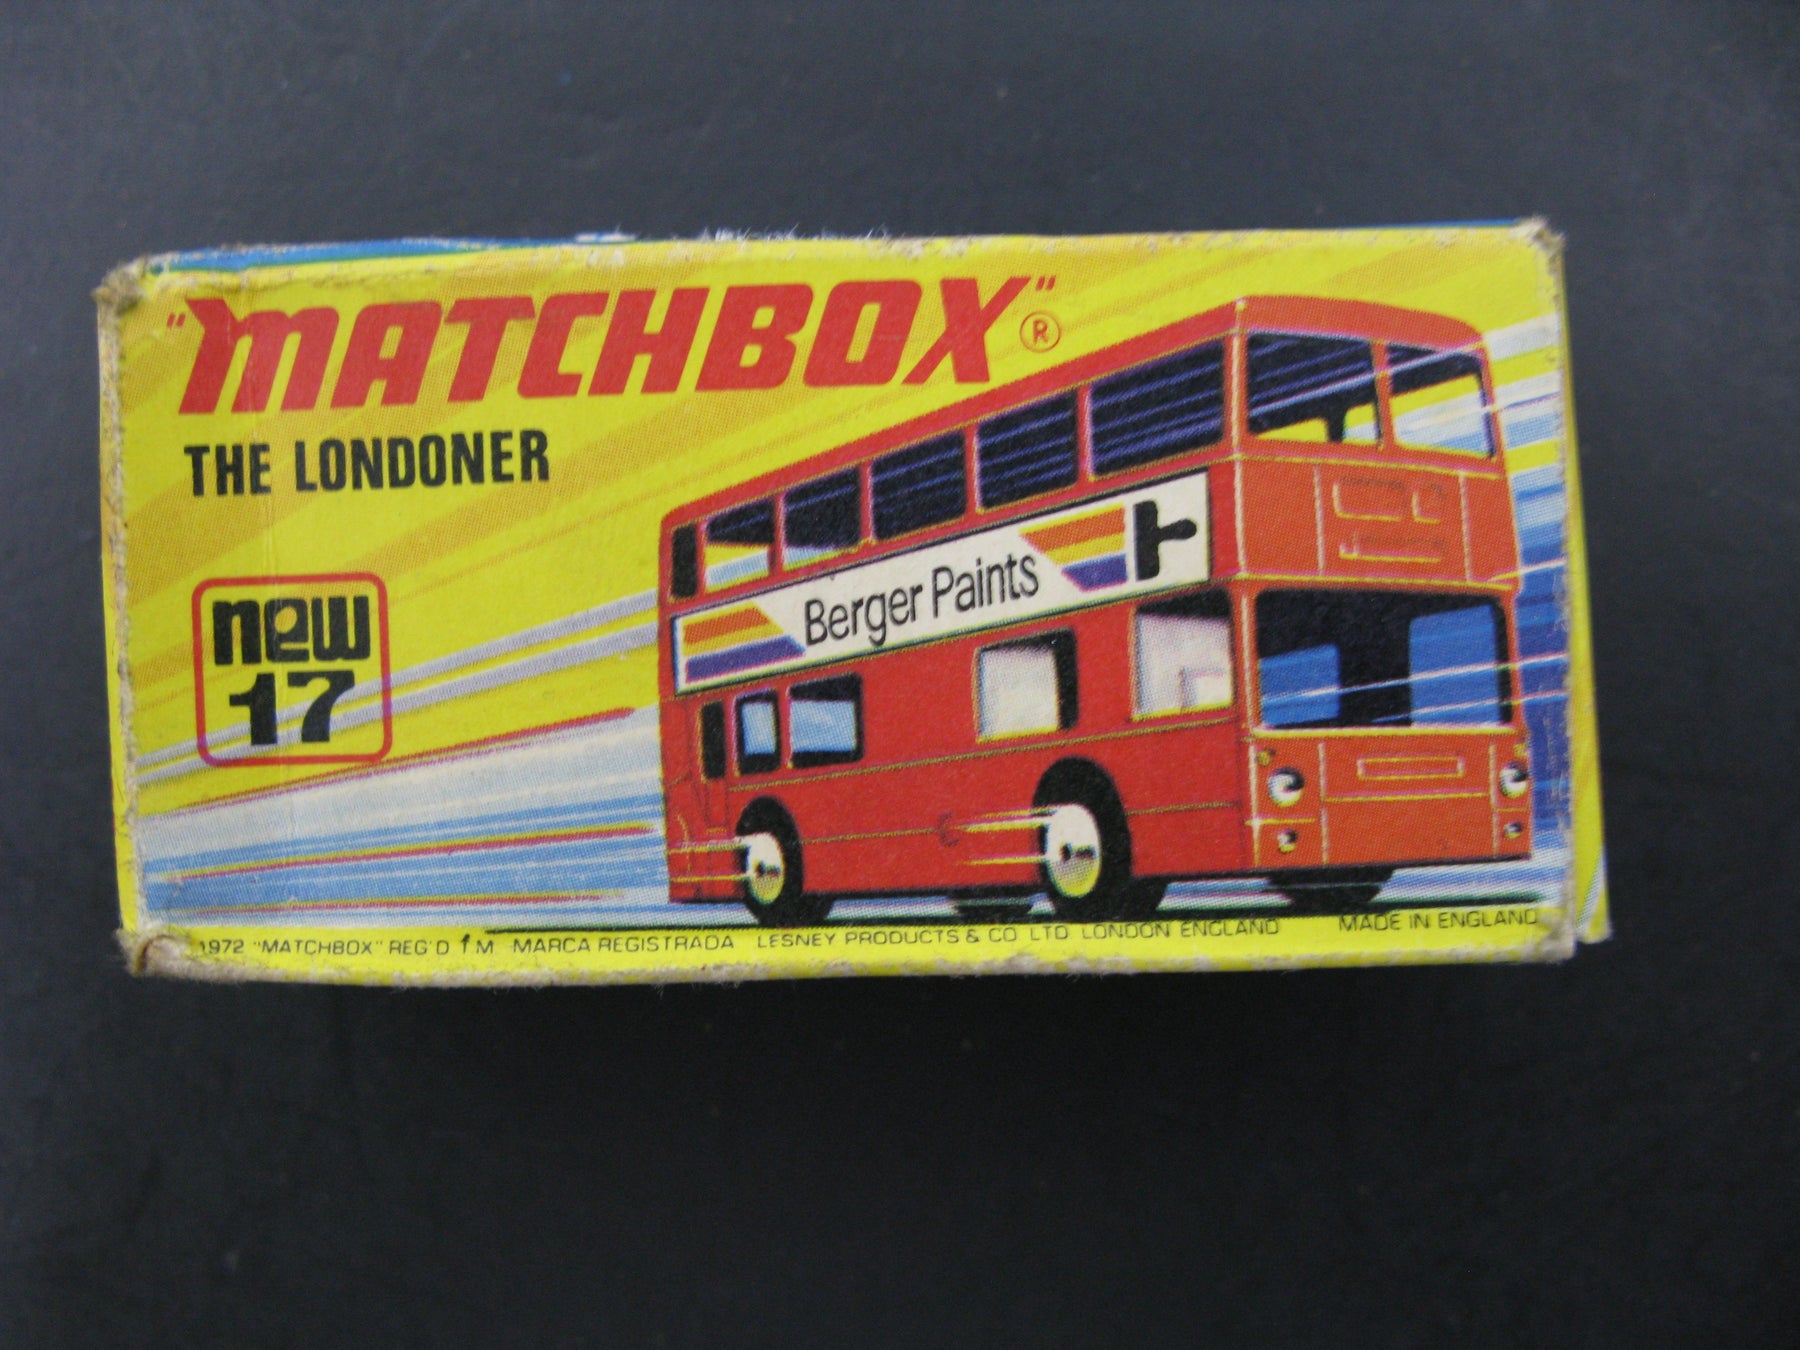 Matchbox The Londoner New 17